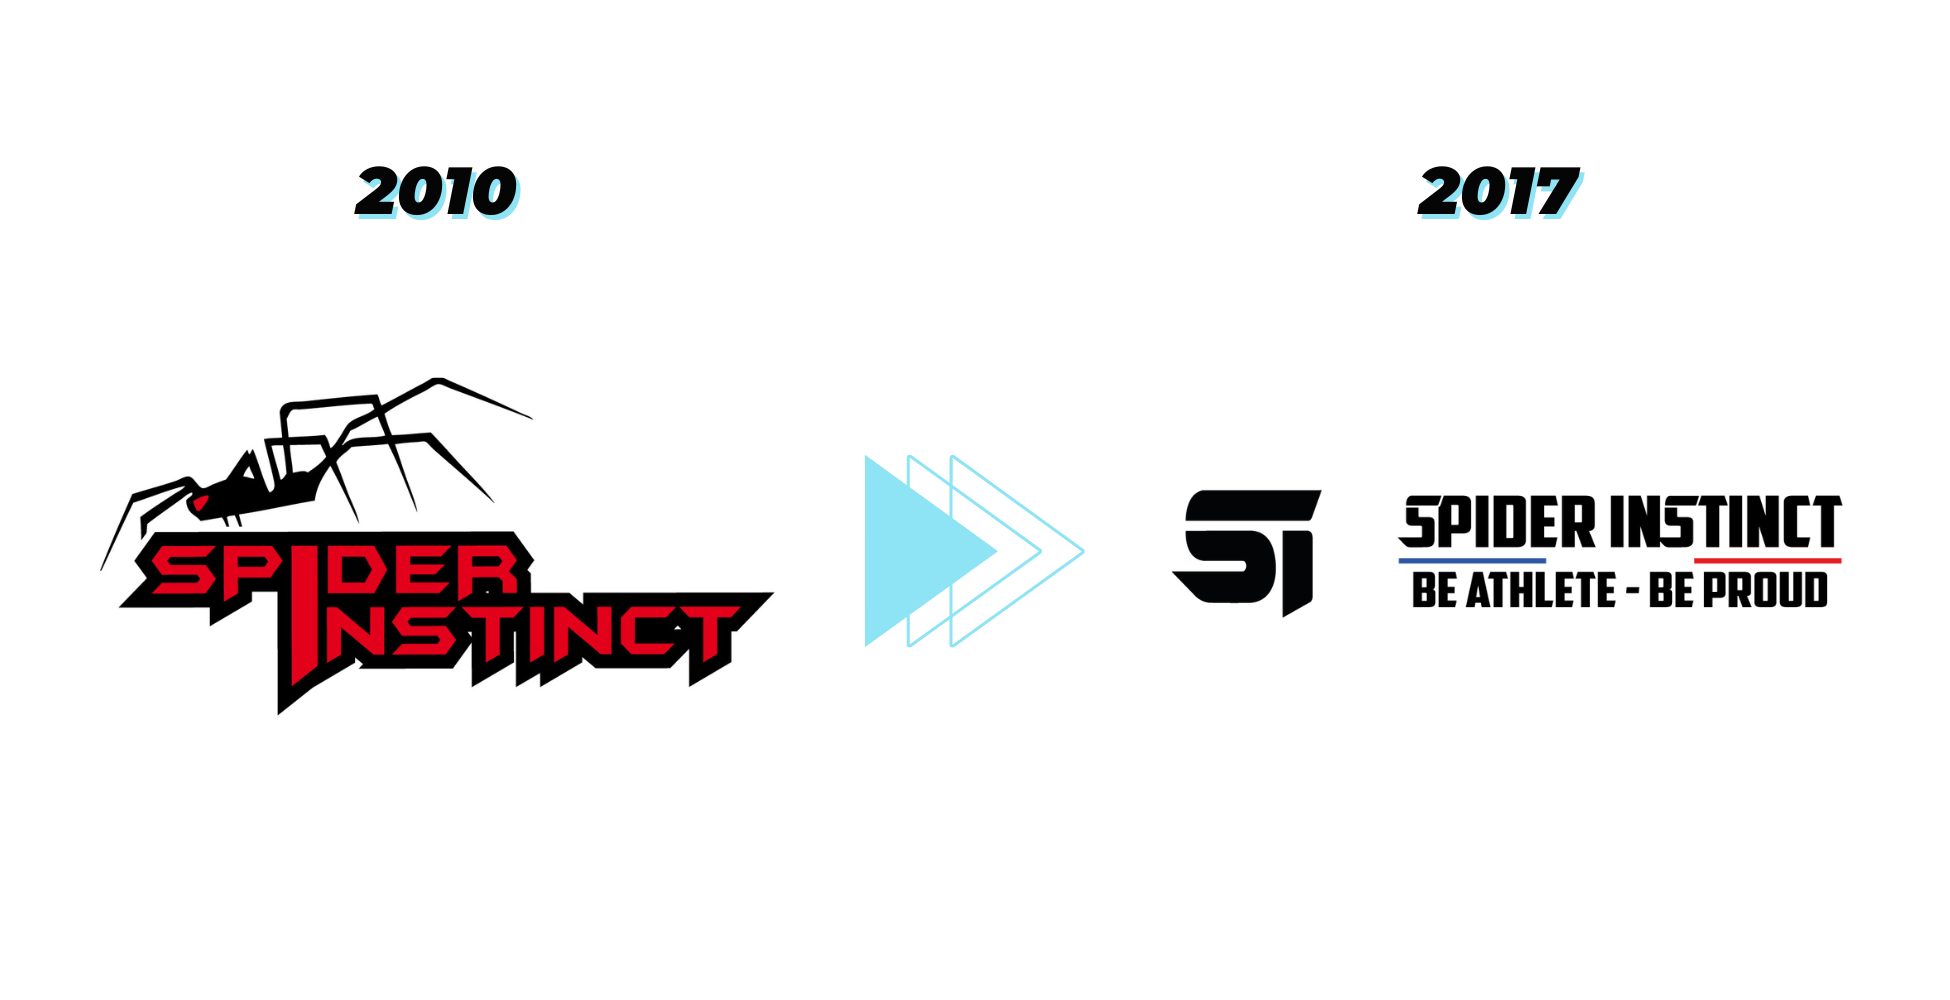 Évolution du logo Spider Instinct marque sportswear français